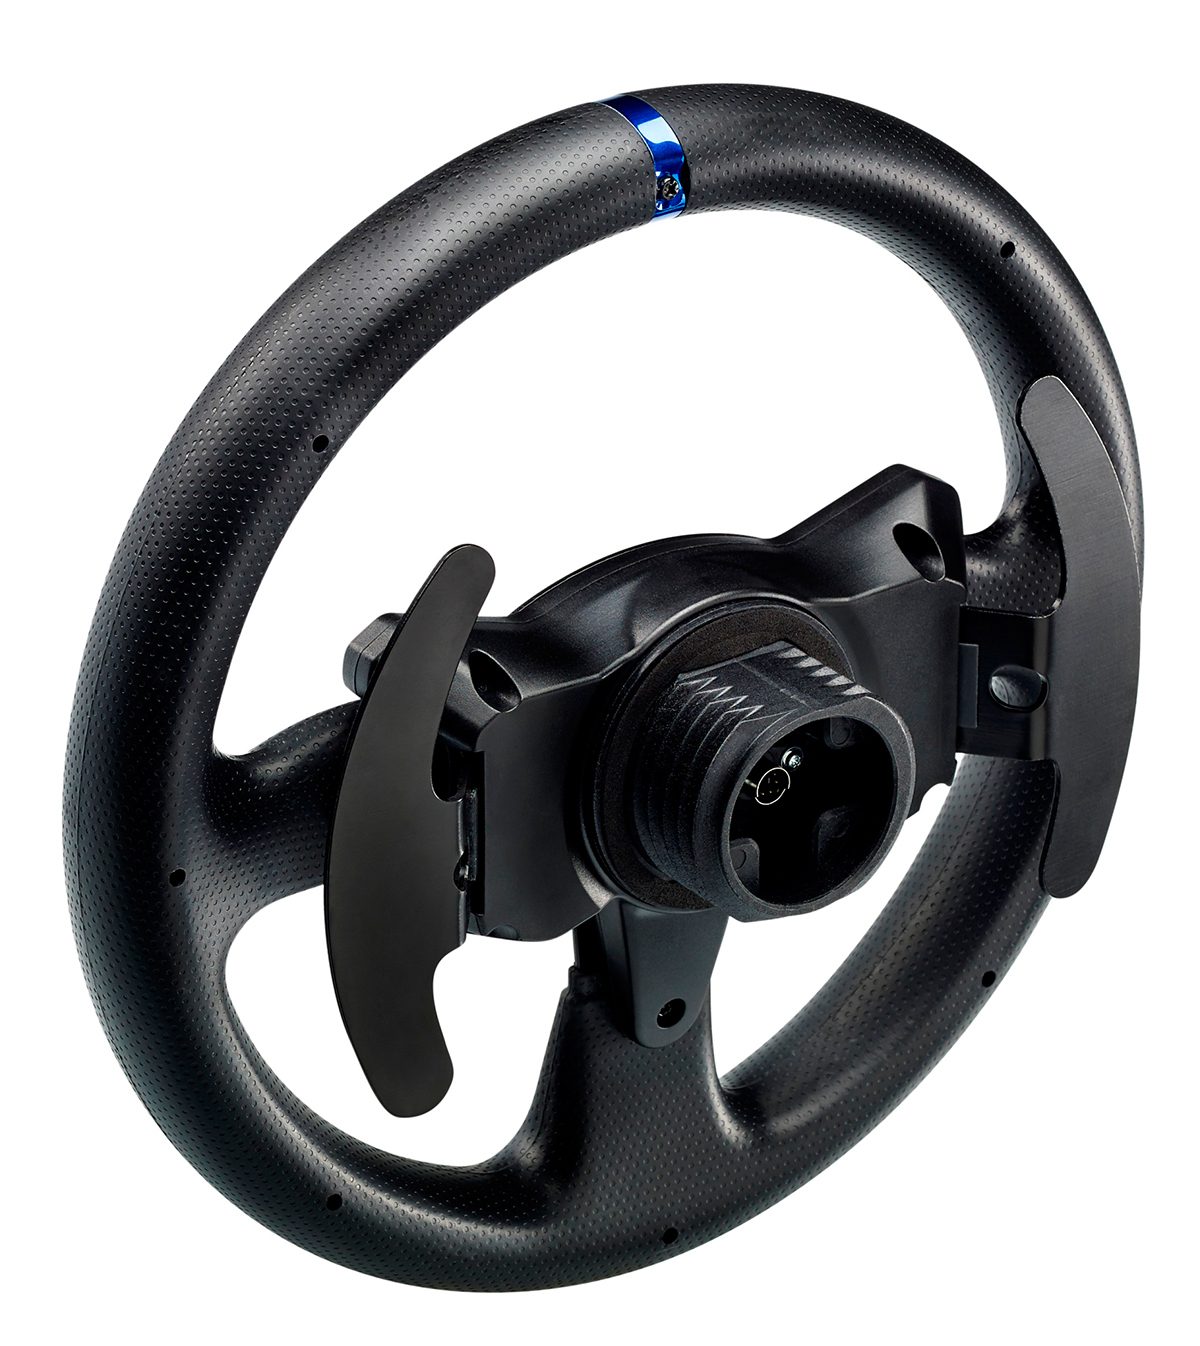 Logitech G27 PC Playstation 2/3 Force Feedback Racing Steering